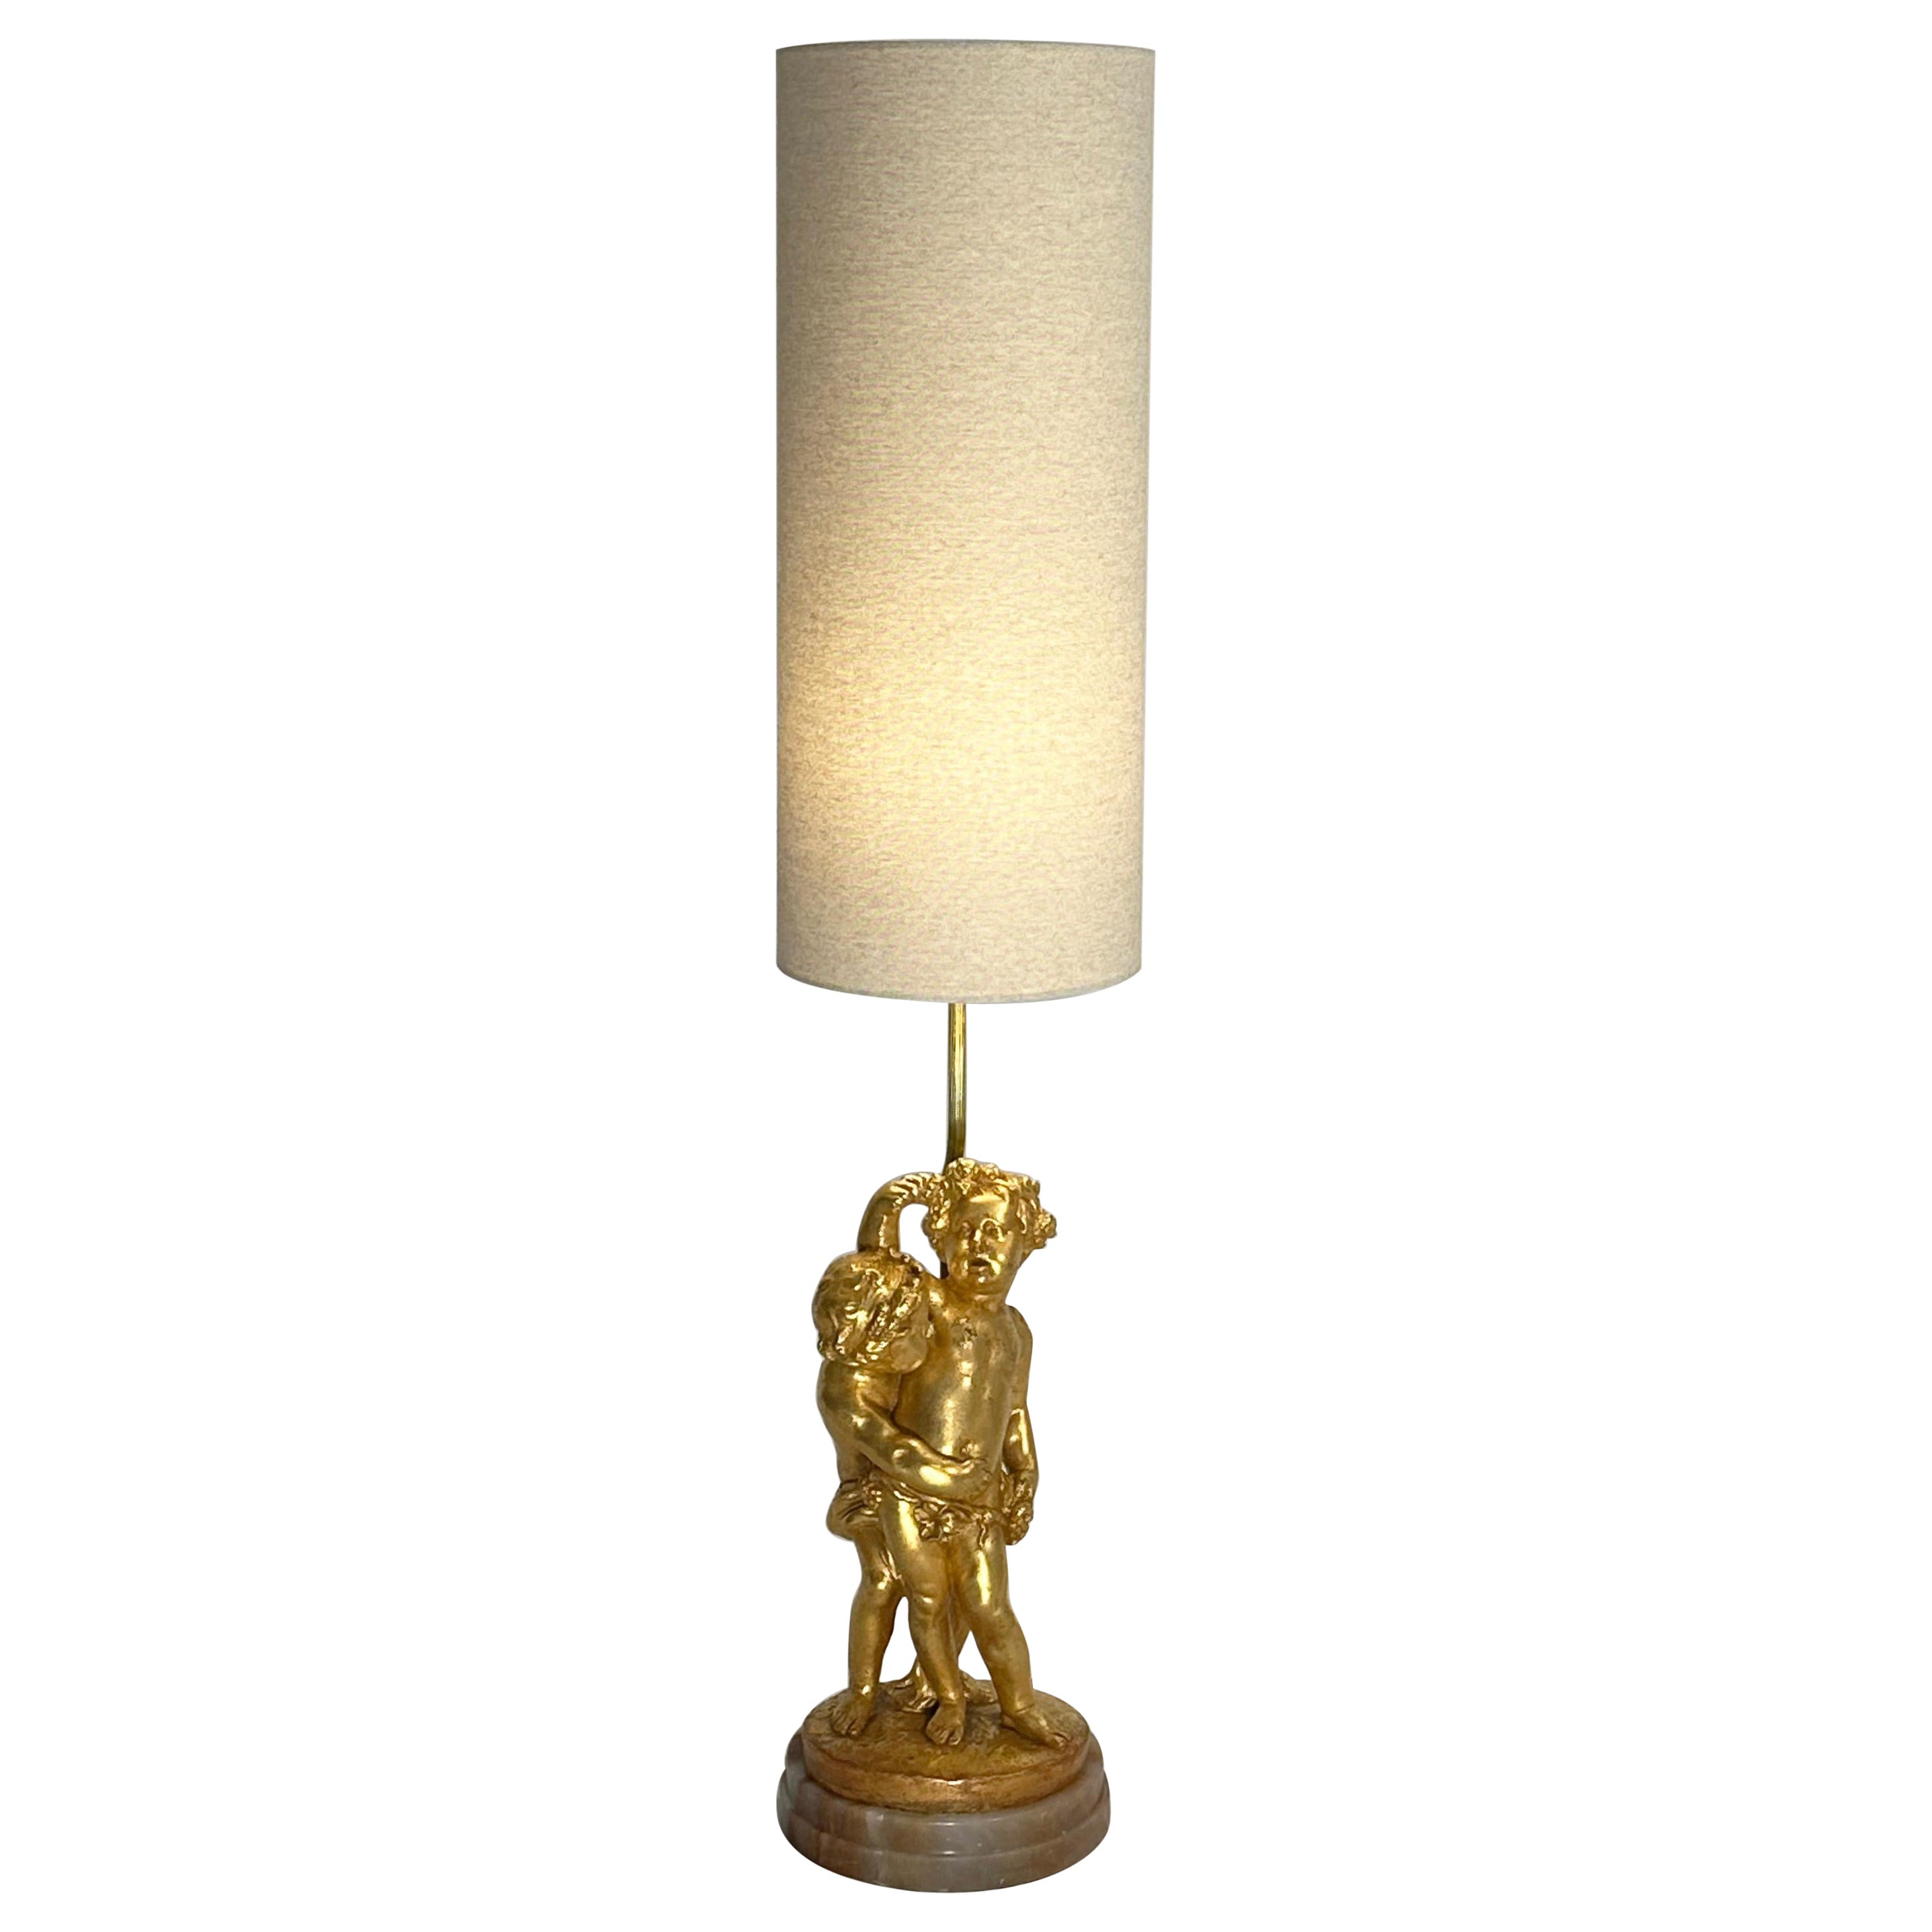 Goldfarbene Puttenlampe im Rokoko-Stil auf Onyxsockel, Vintage